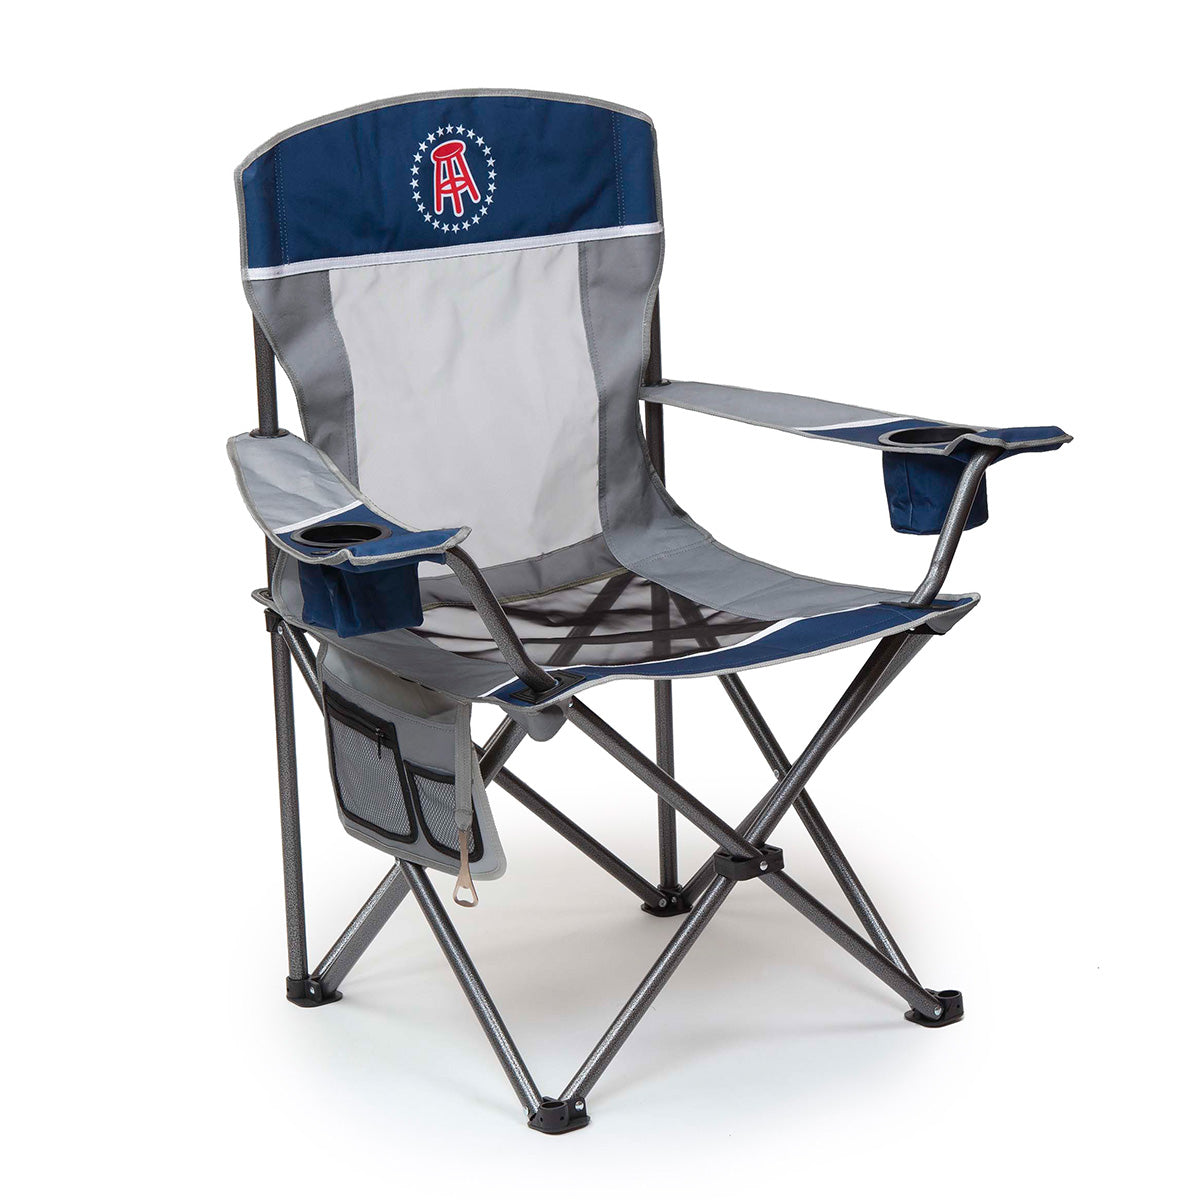 Barstool Sports Oversized Mesh Folding Chair-Accessories-Barstool Sports-Navy-One Size-Barstool Sports